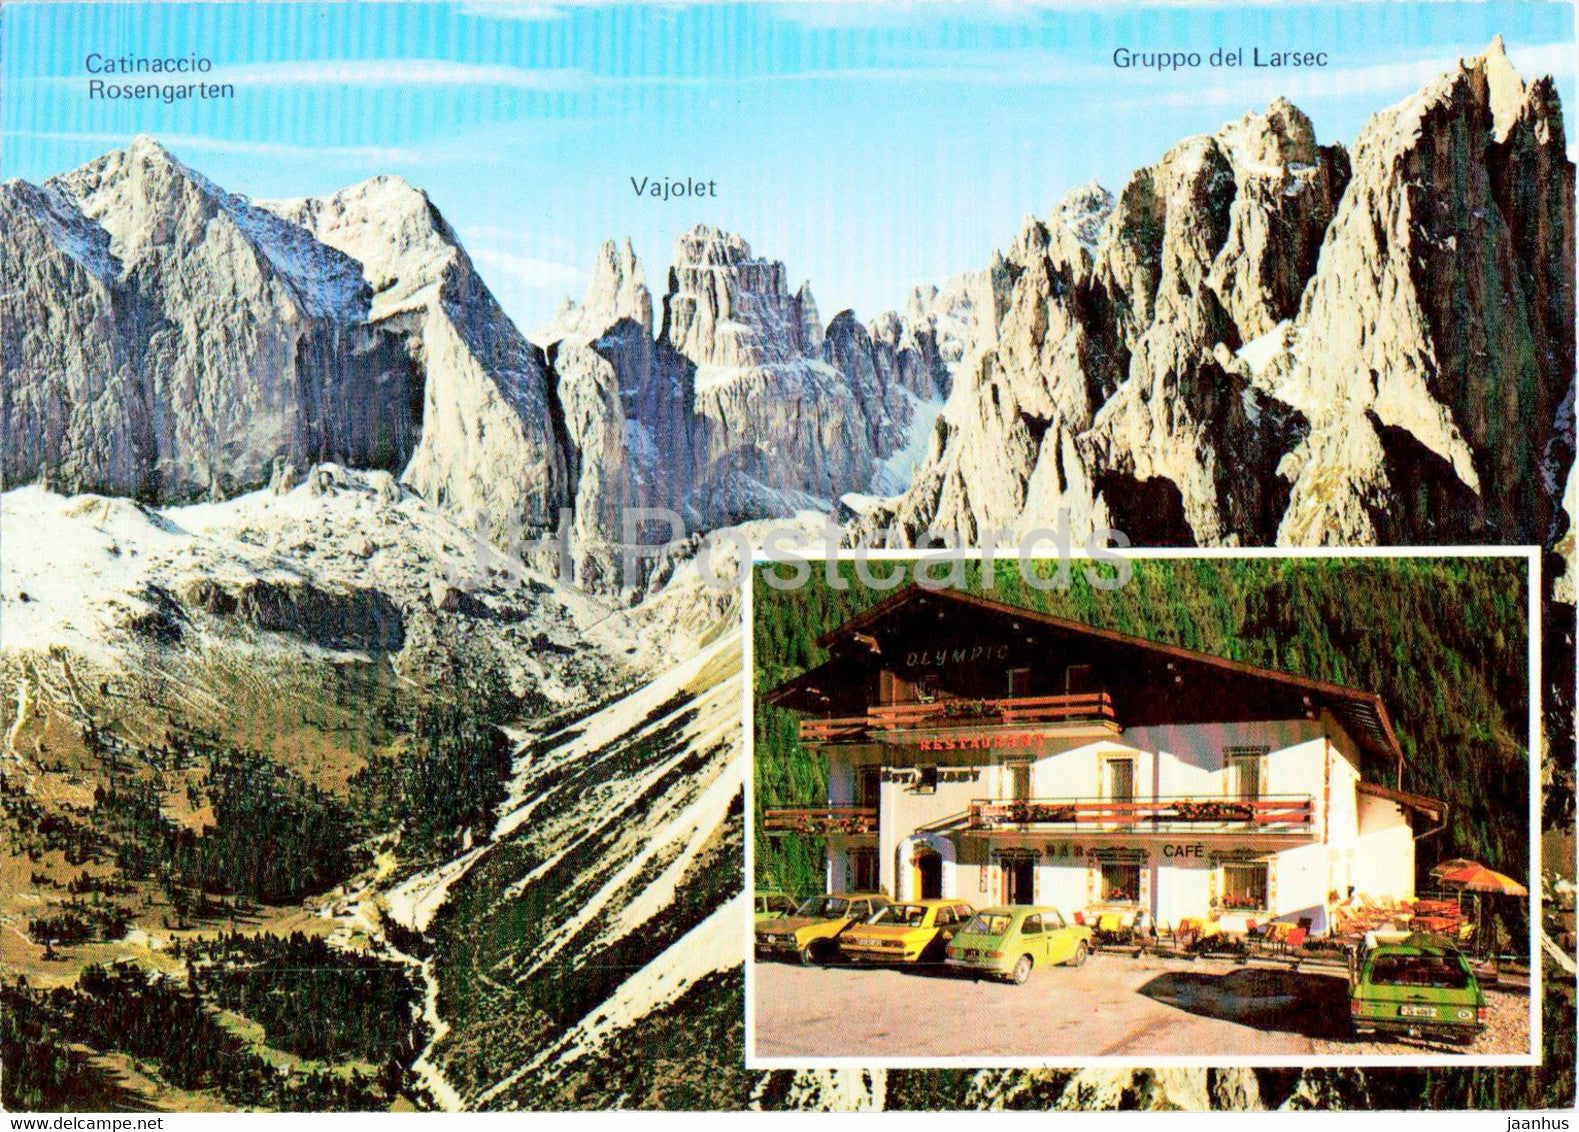 Pension Pensione Olympic - Vigo di Fassa - car - Italy - unused - JH Postcards